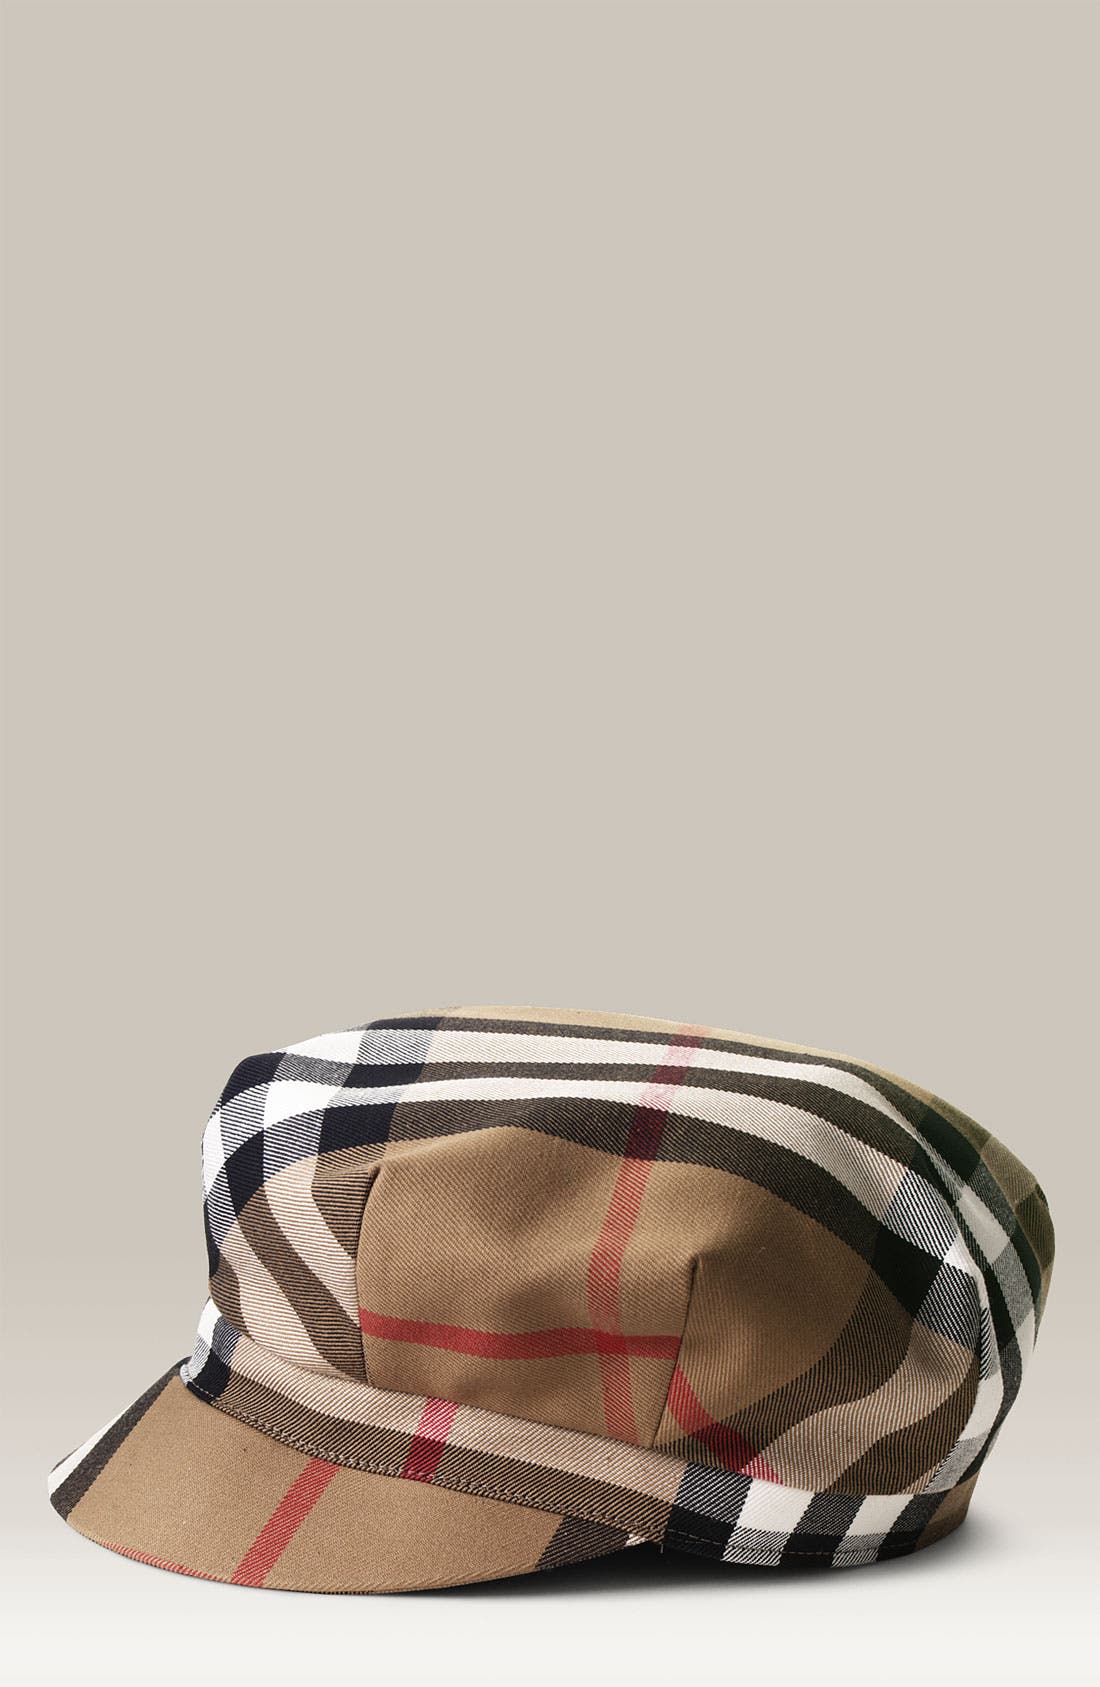 burberry newsboy cap